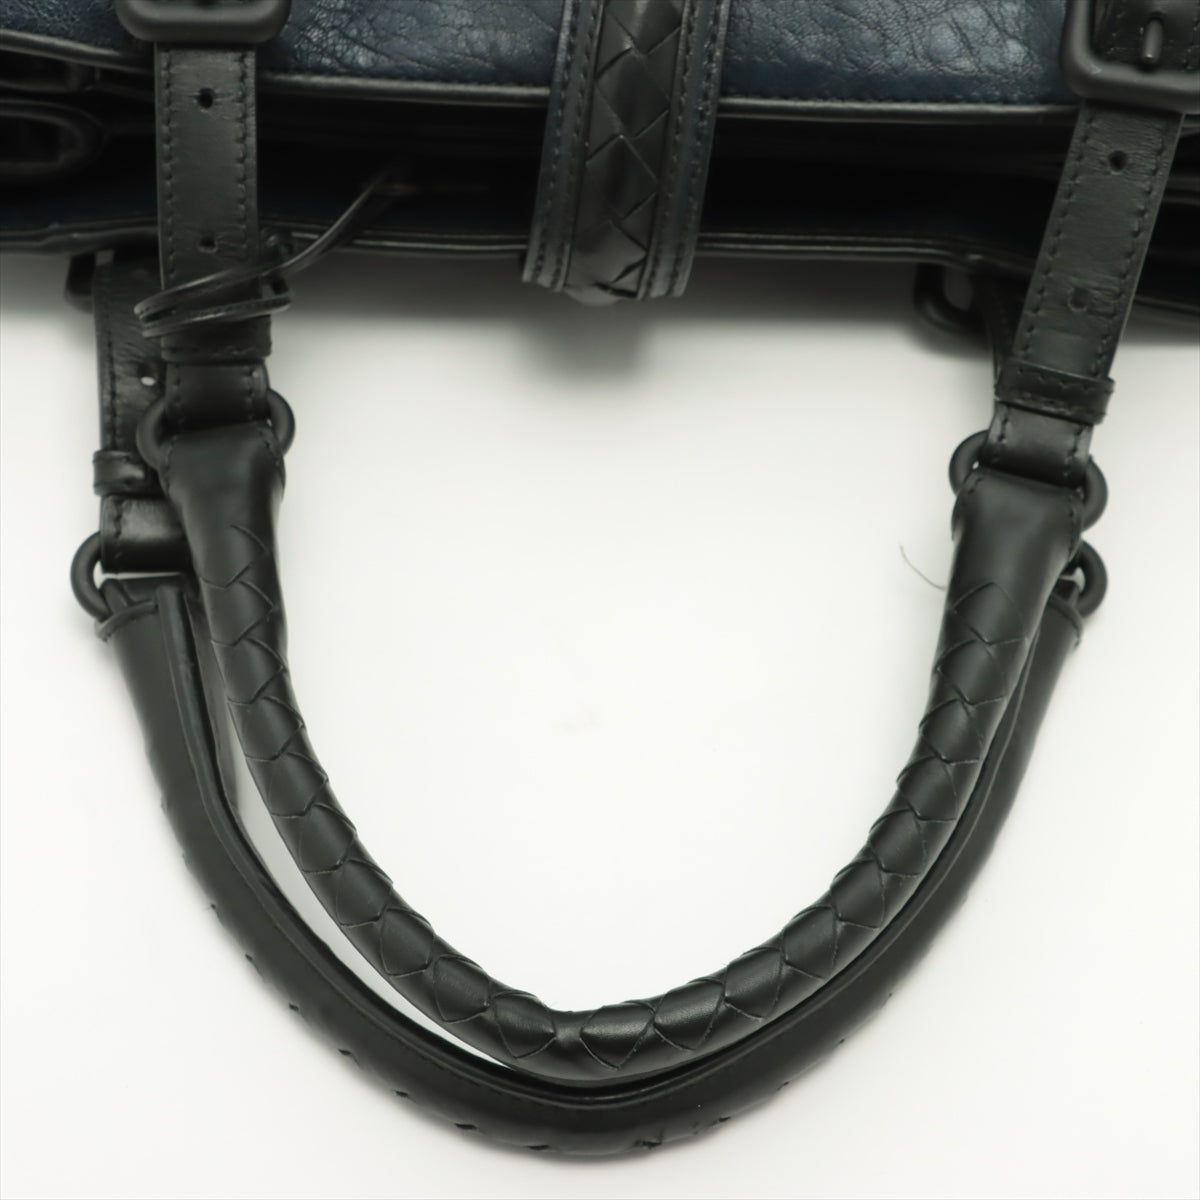 Bottega Veneta Intrecciato Leather Hand bag Navy blue